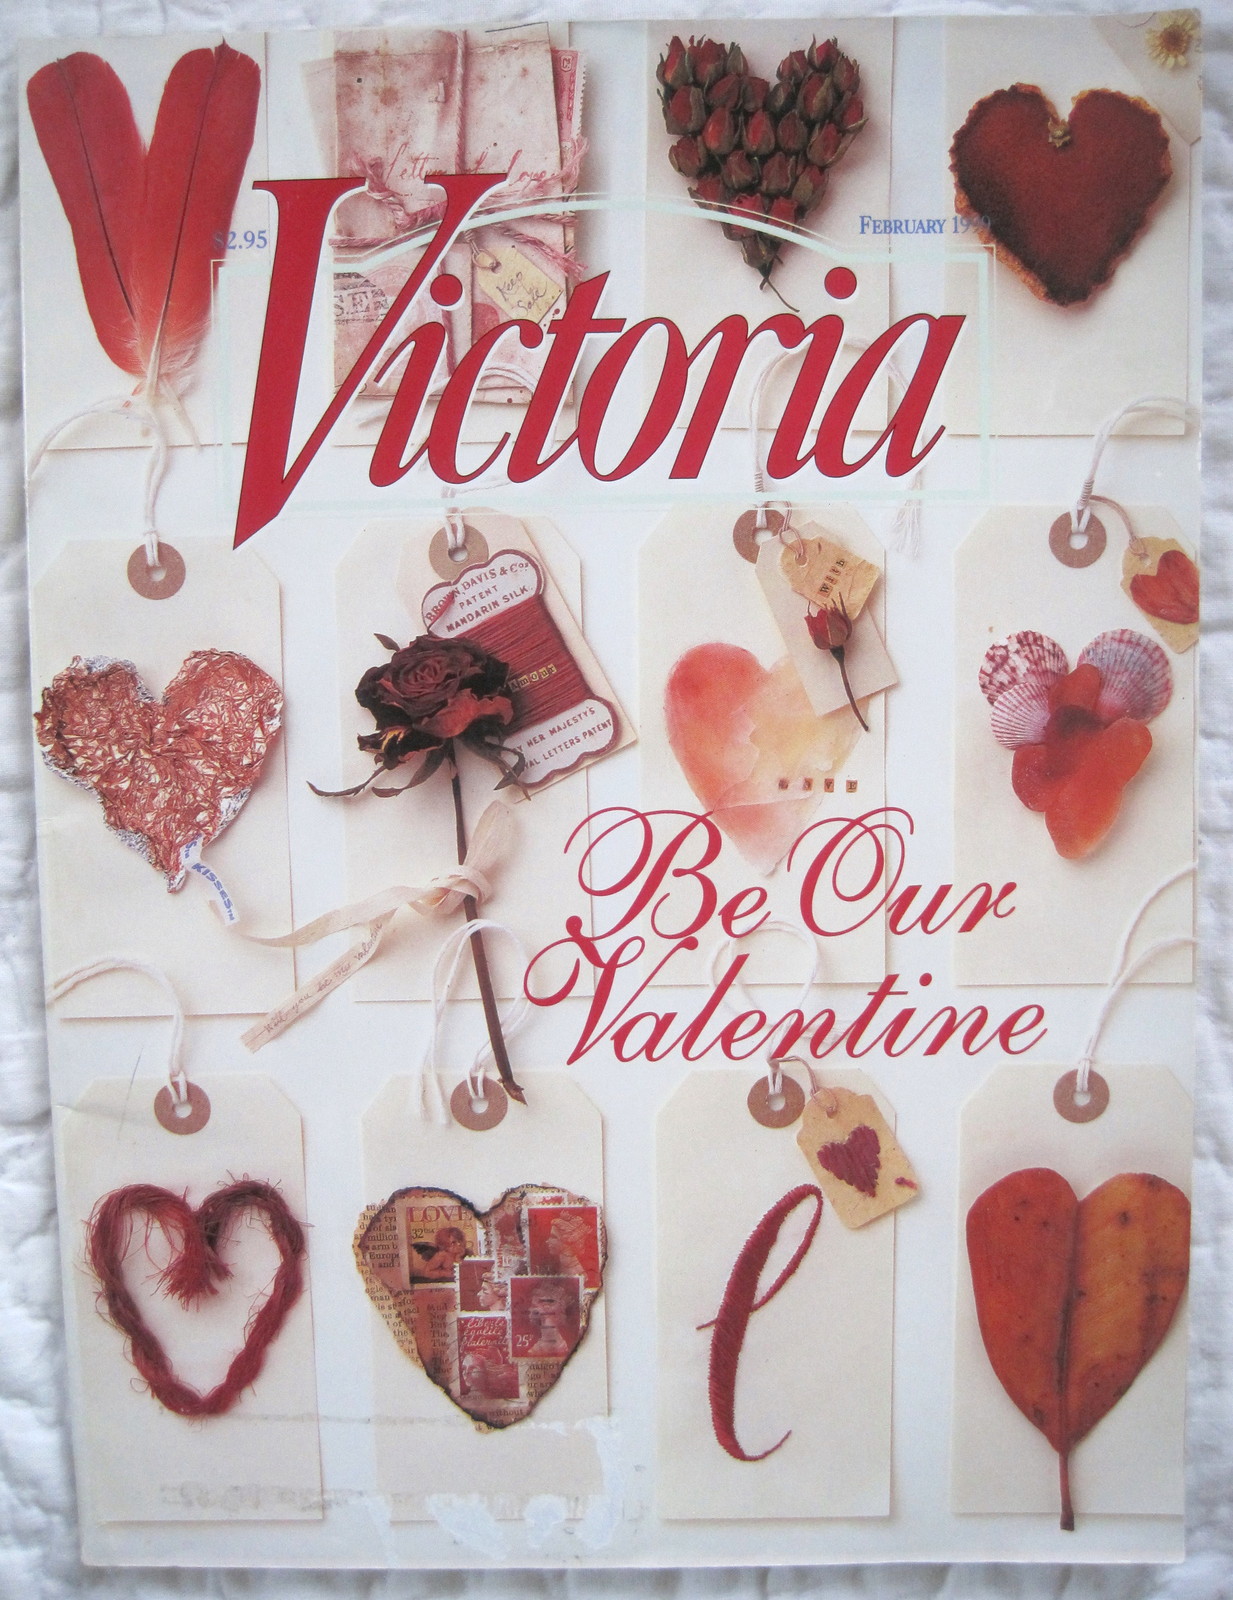 Victoria Magazine "Valentine Issue" February 1999 - $6.00